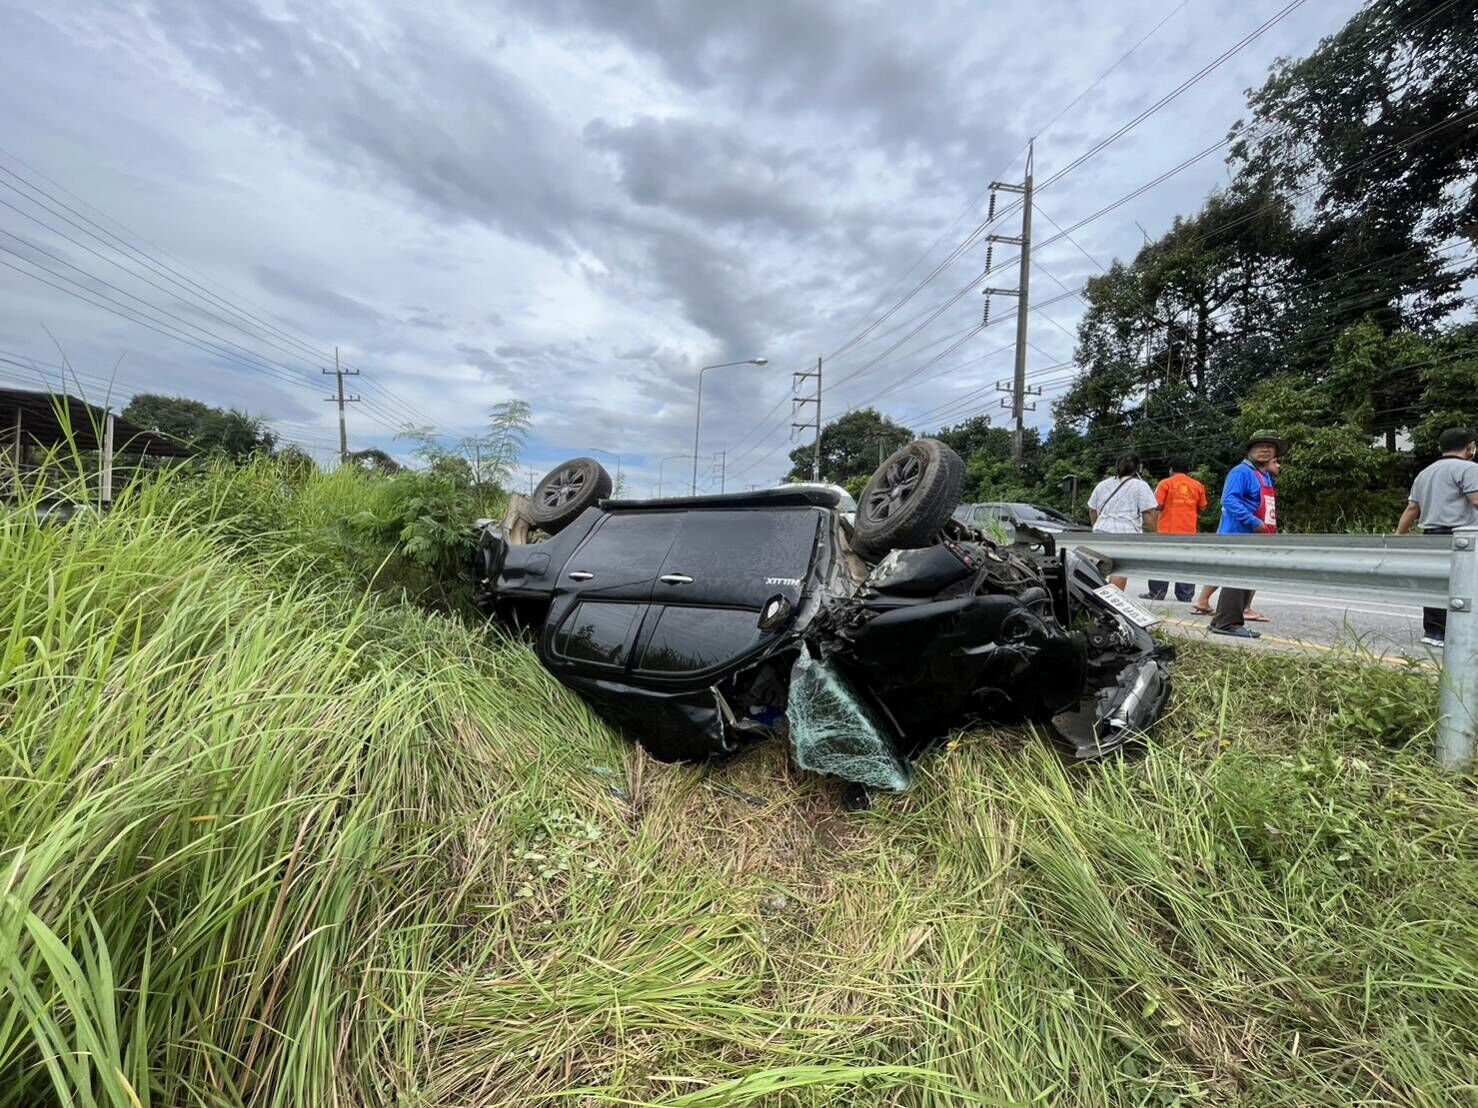 Heartbreak on duty: Special Branch Superintendent’s birthday turns tragic in Rayong car crash